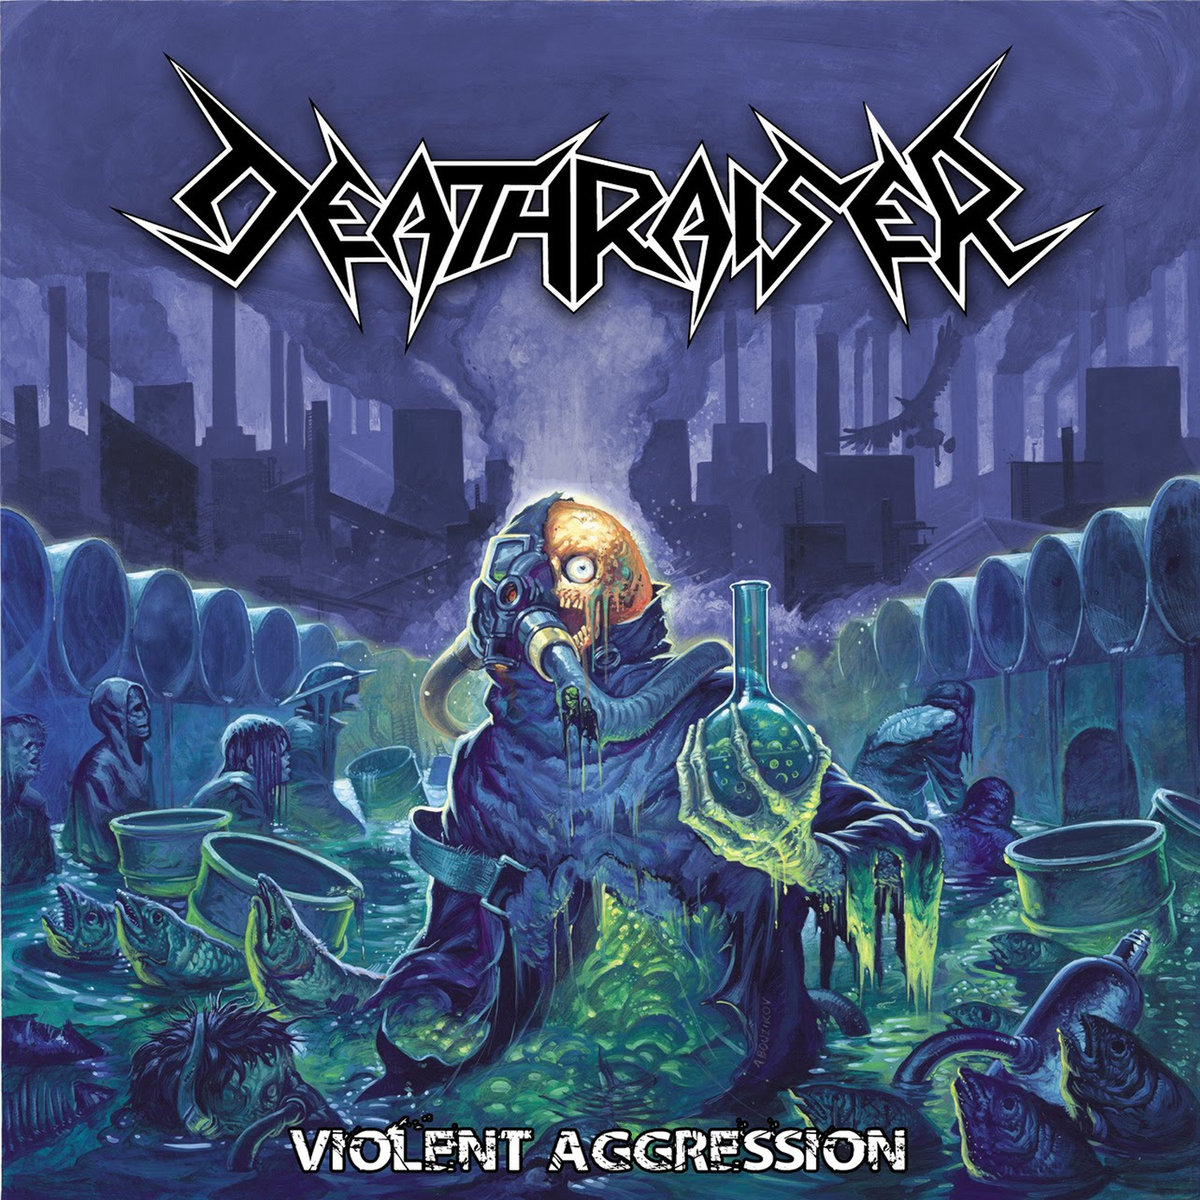 Deathraiser-Violent-Aggression.jpg